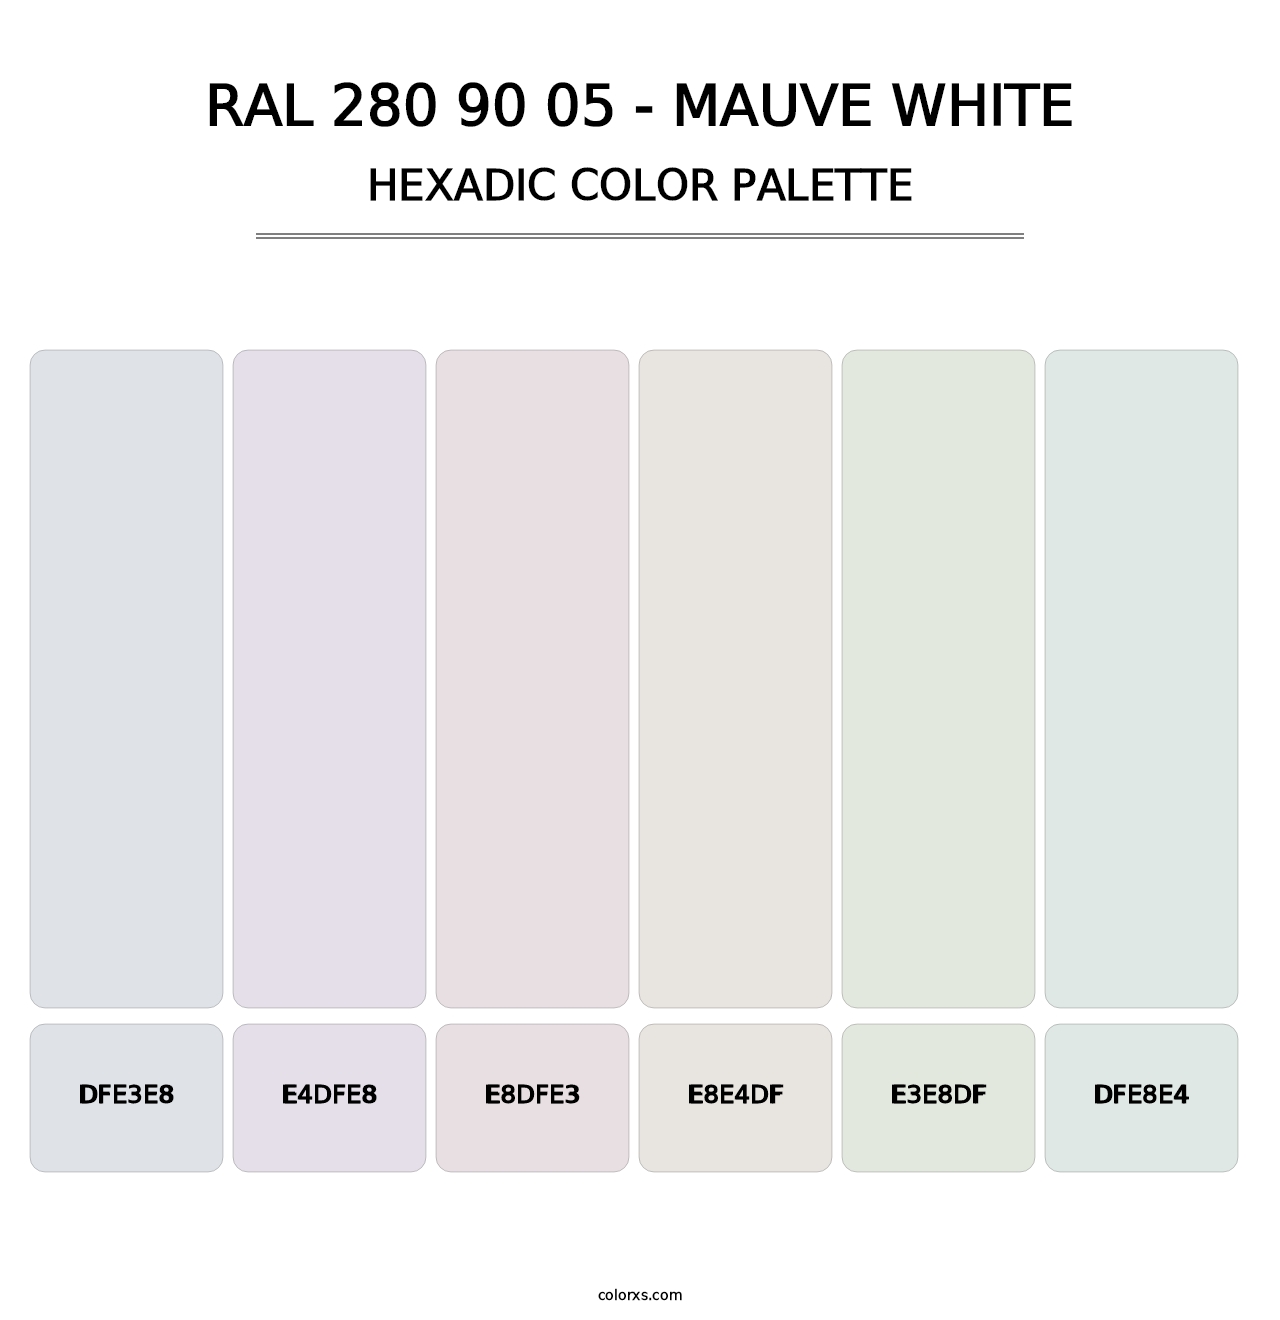 RAL 280 90 05 - Mauve White - Hexadic Color Palette